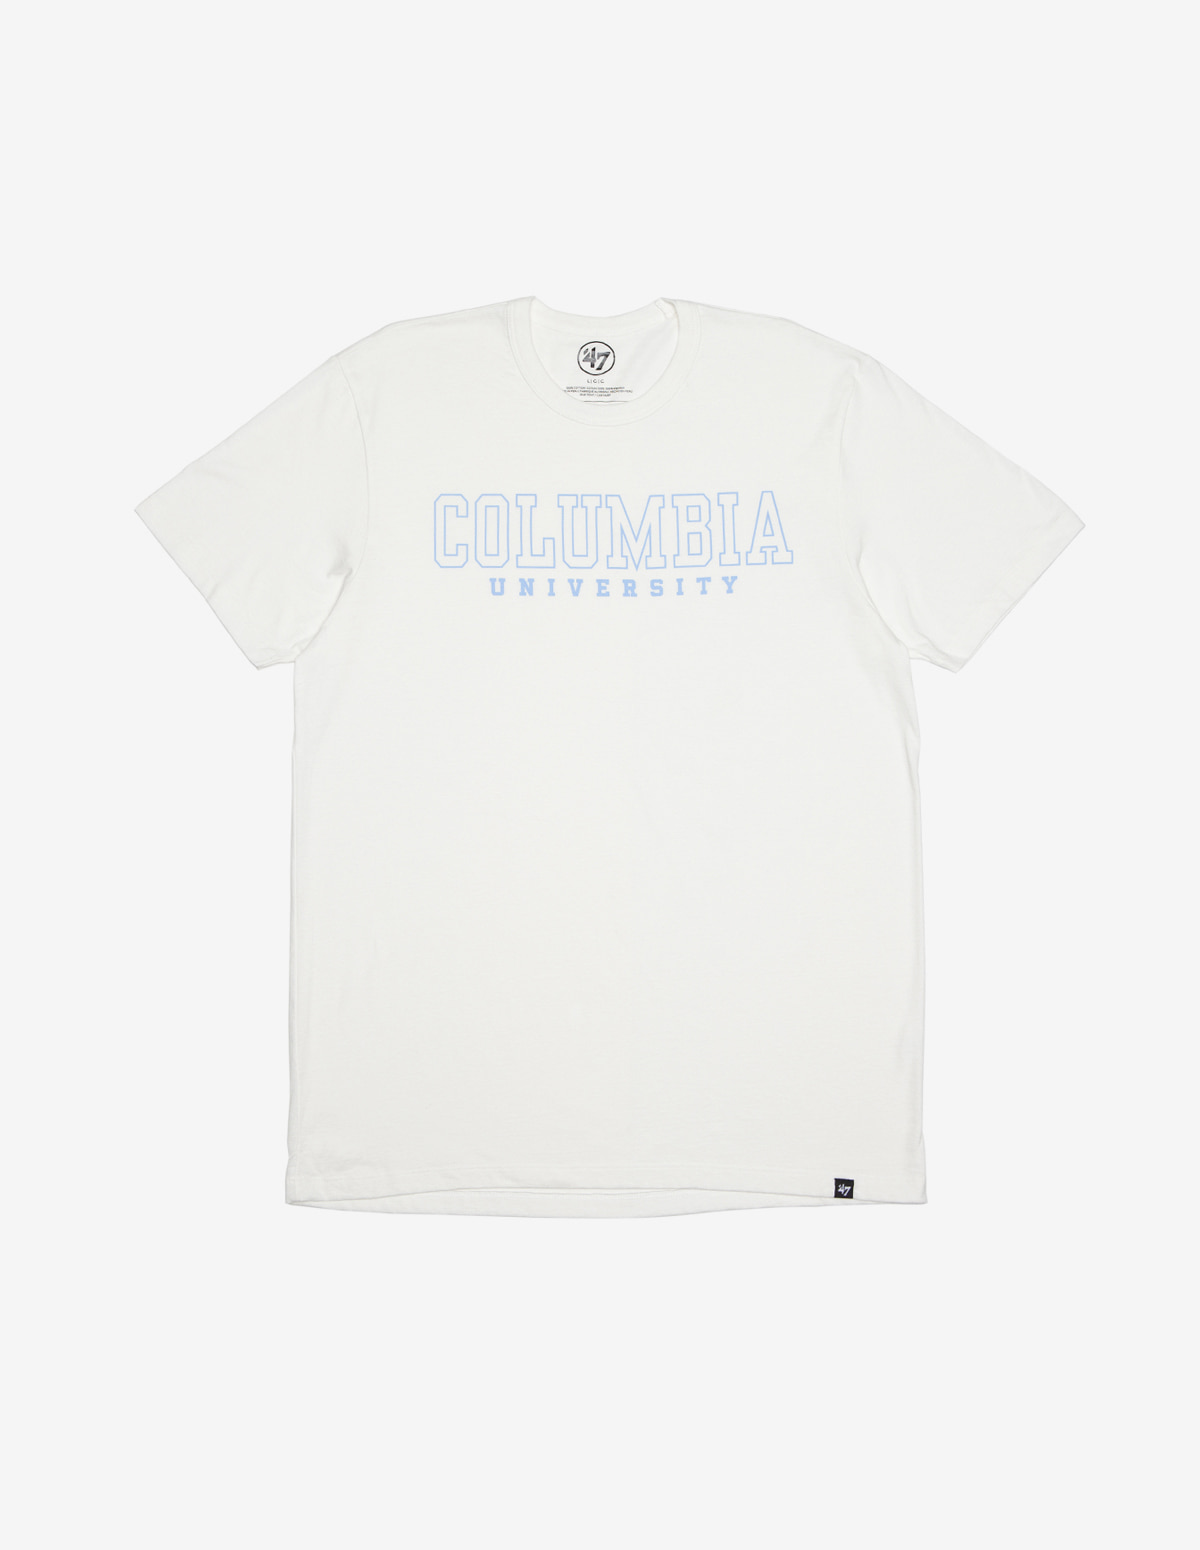 University T-Shirt : Columbia